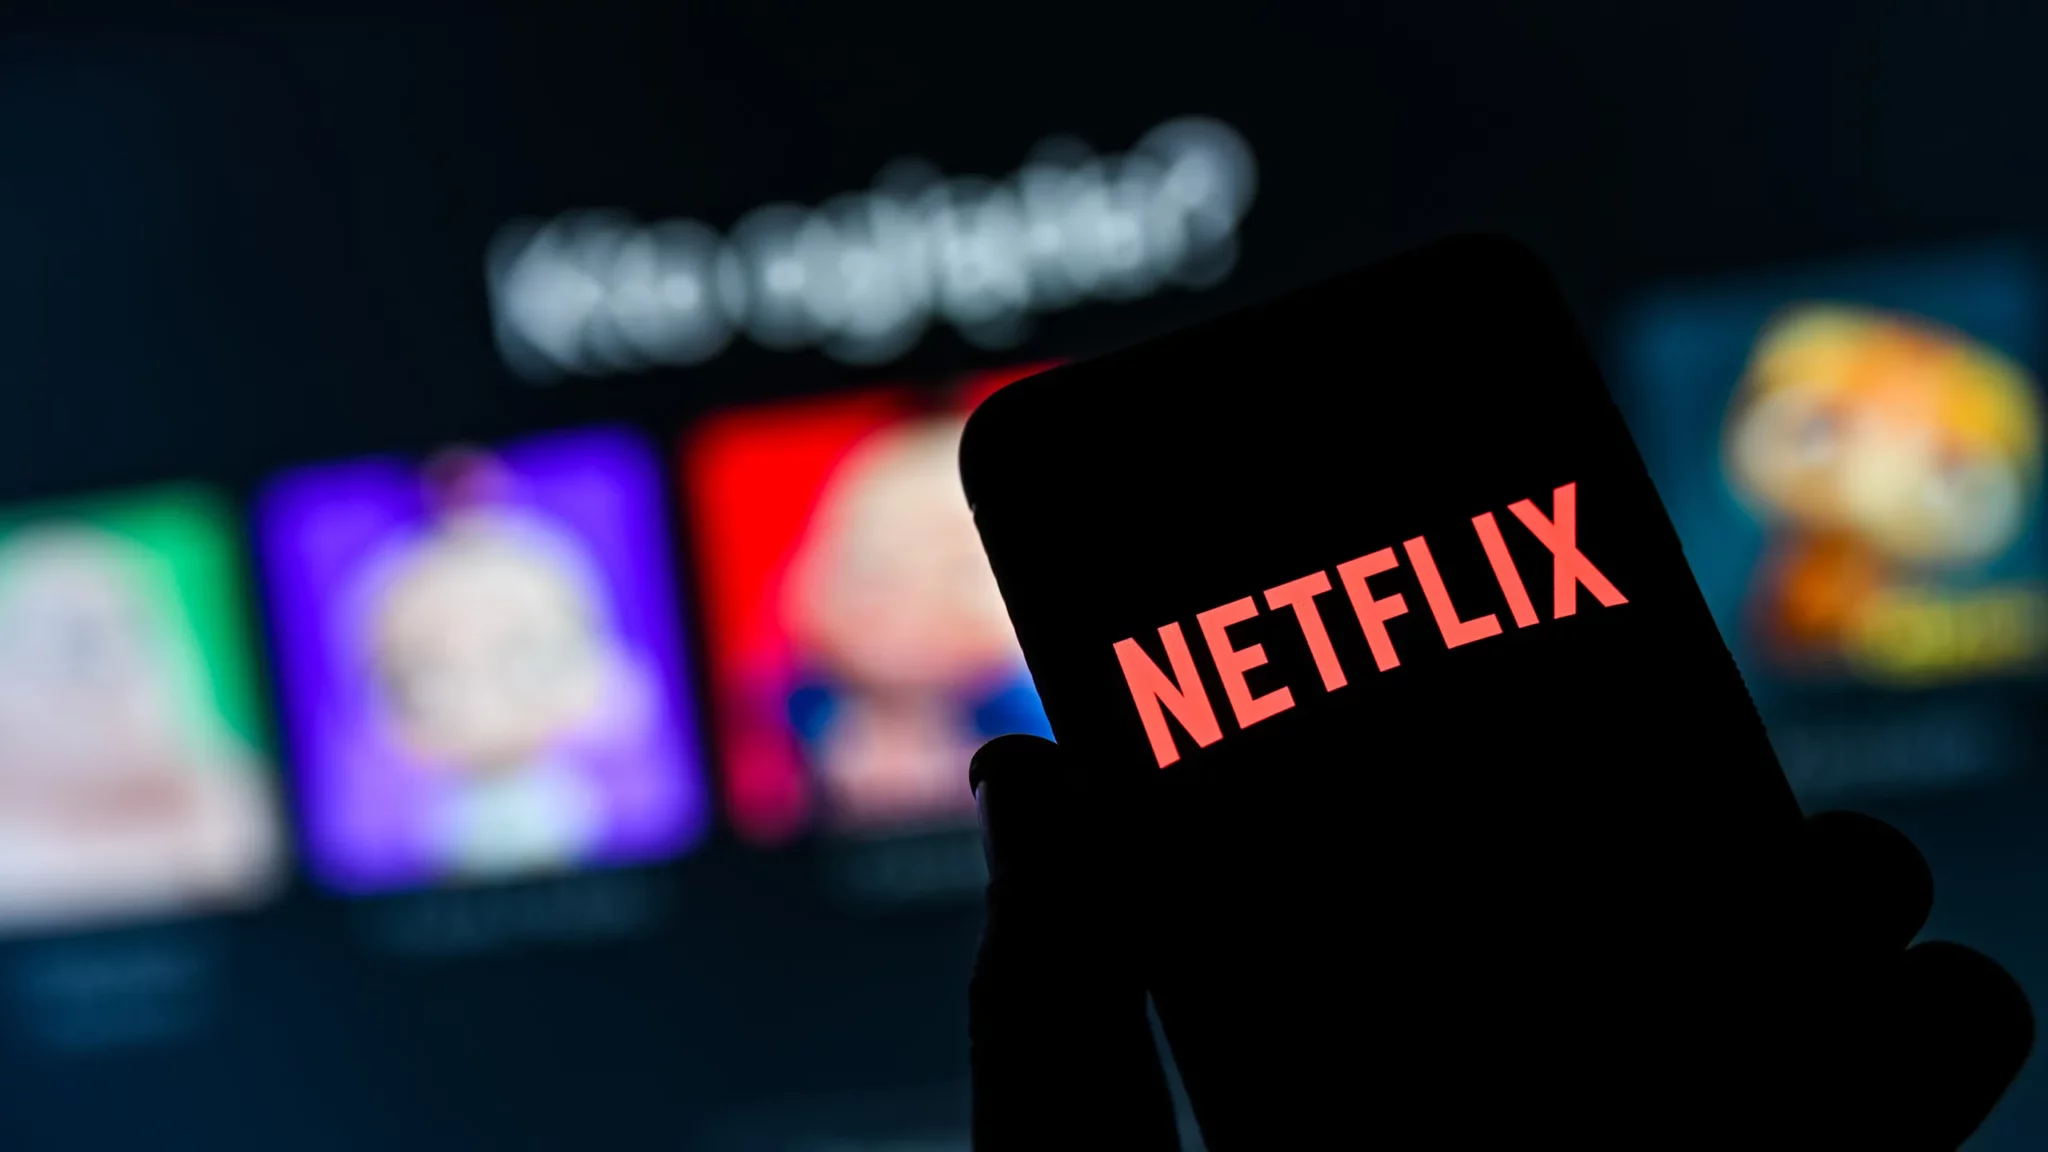 Netflix এ একটি কাস্টম প্রোফাইল ছবি সেট করার জন্য গাইড